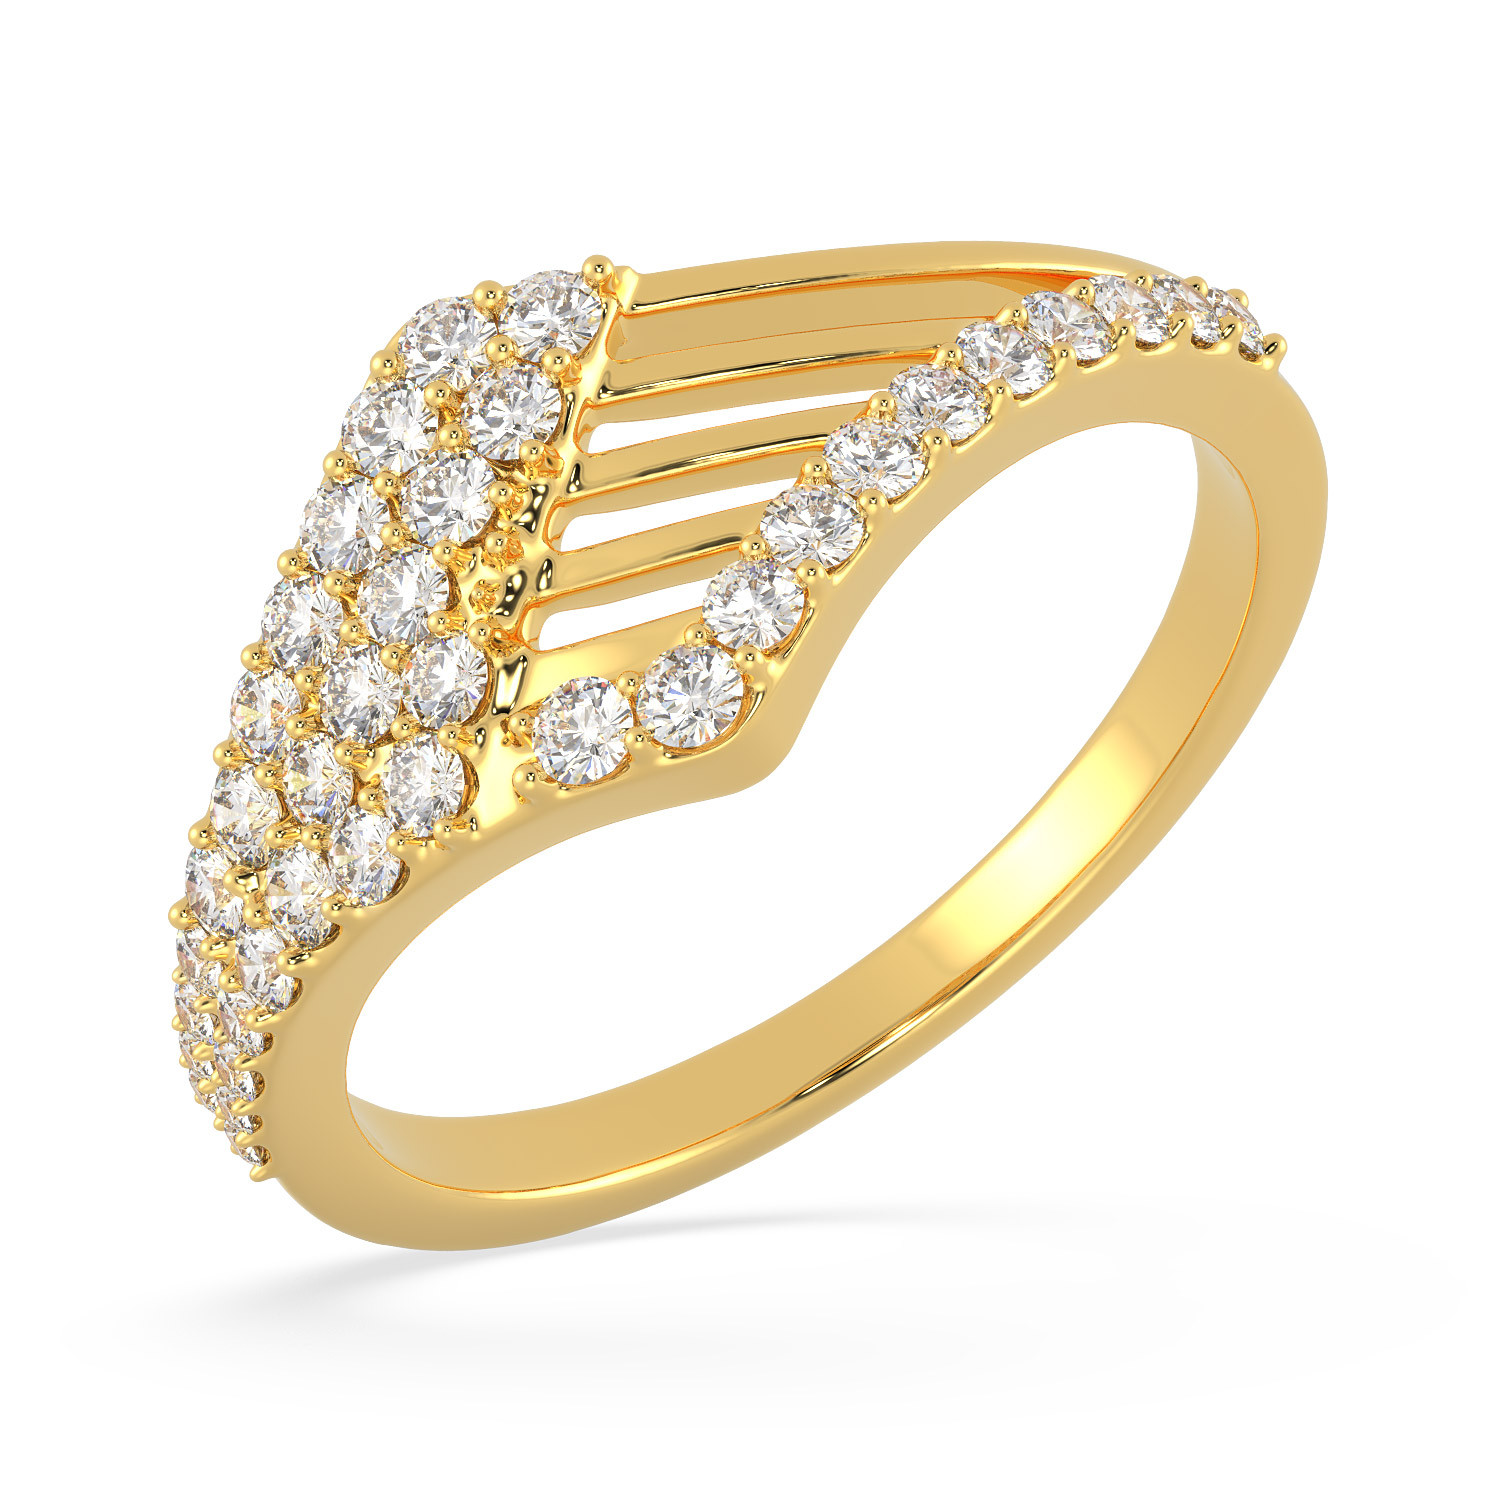 Malabar 22 KT Gold Studded Casual Ring SKYFRDZ087